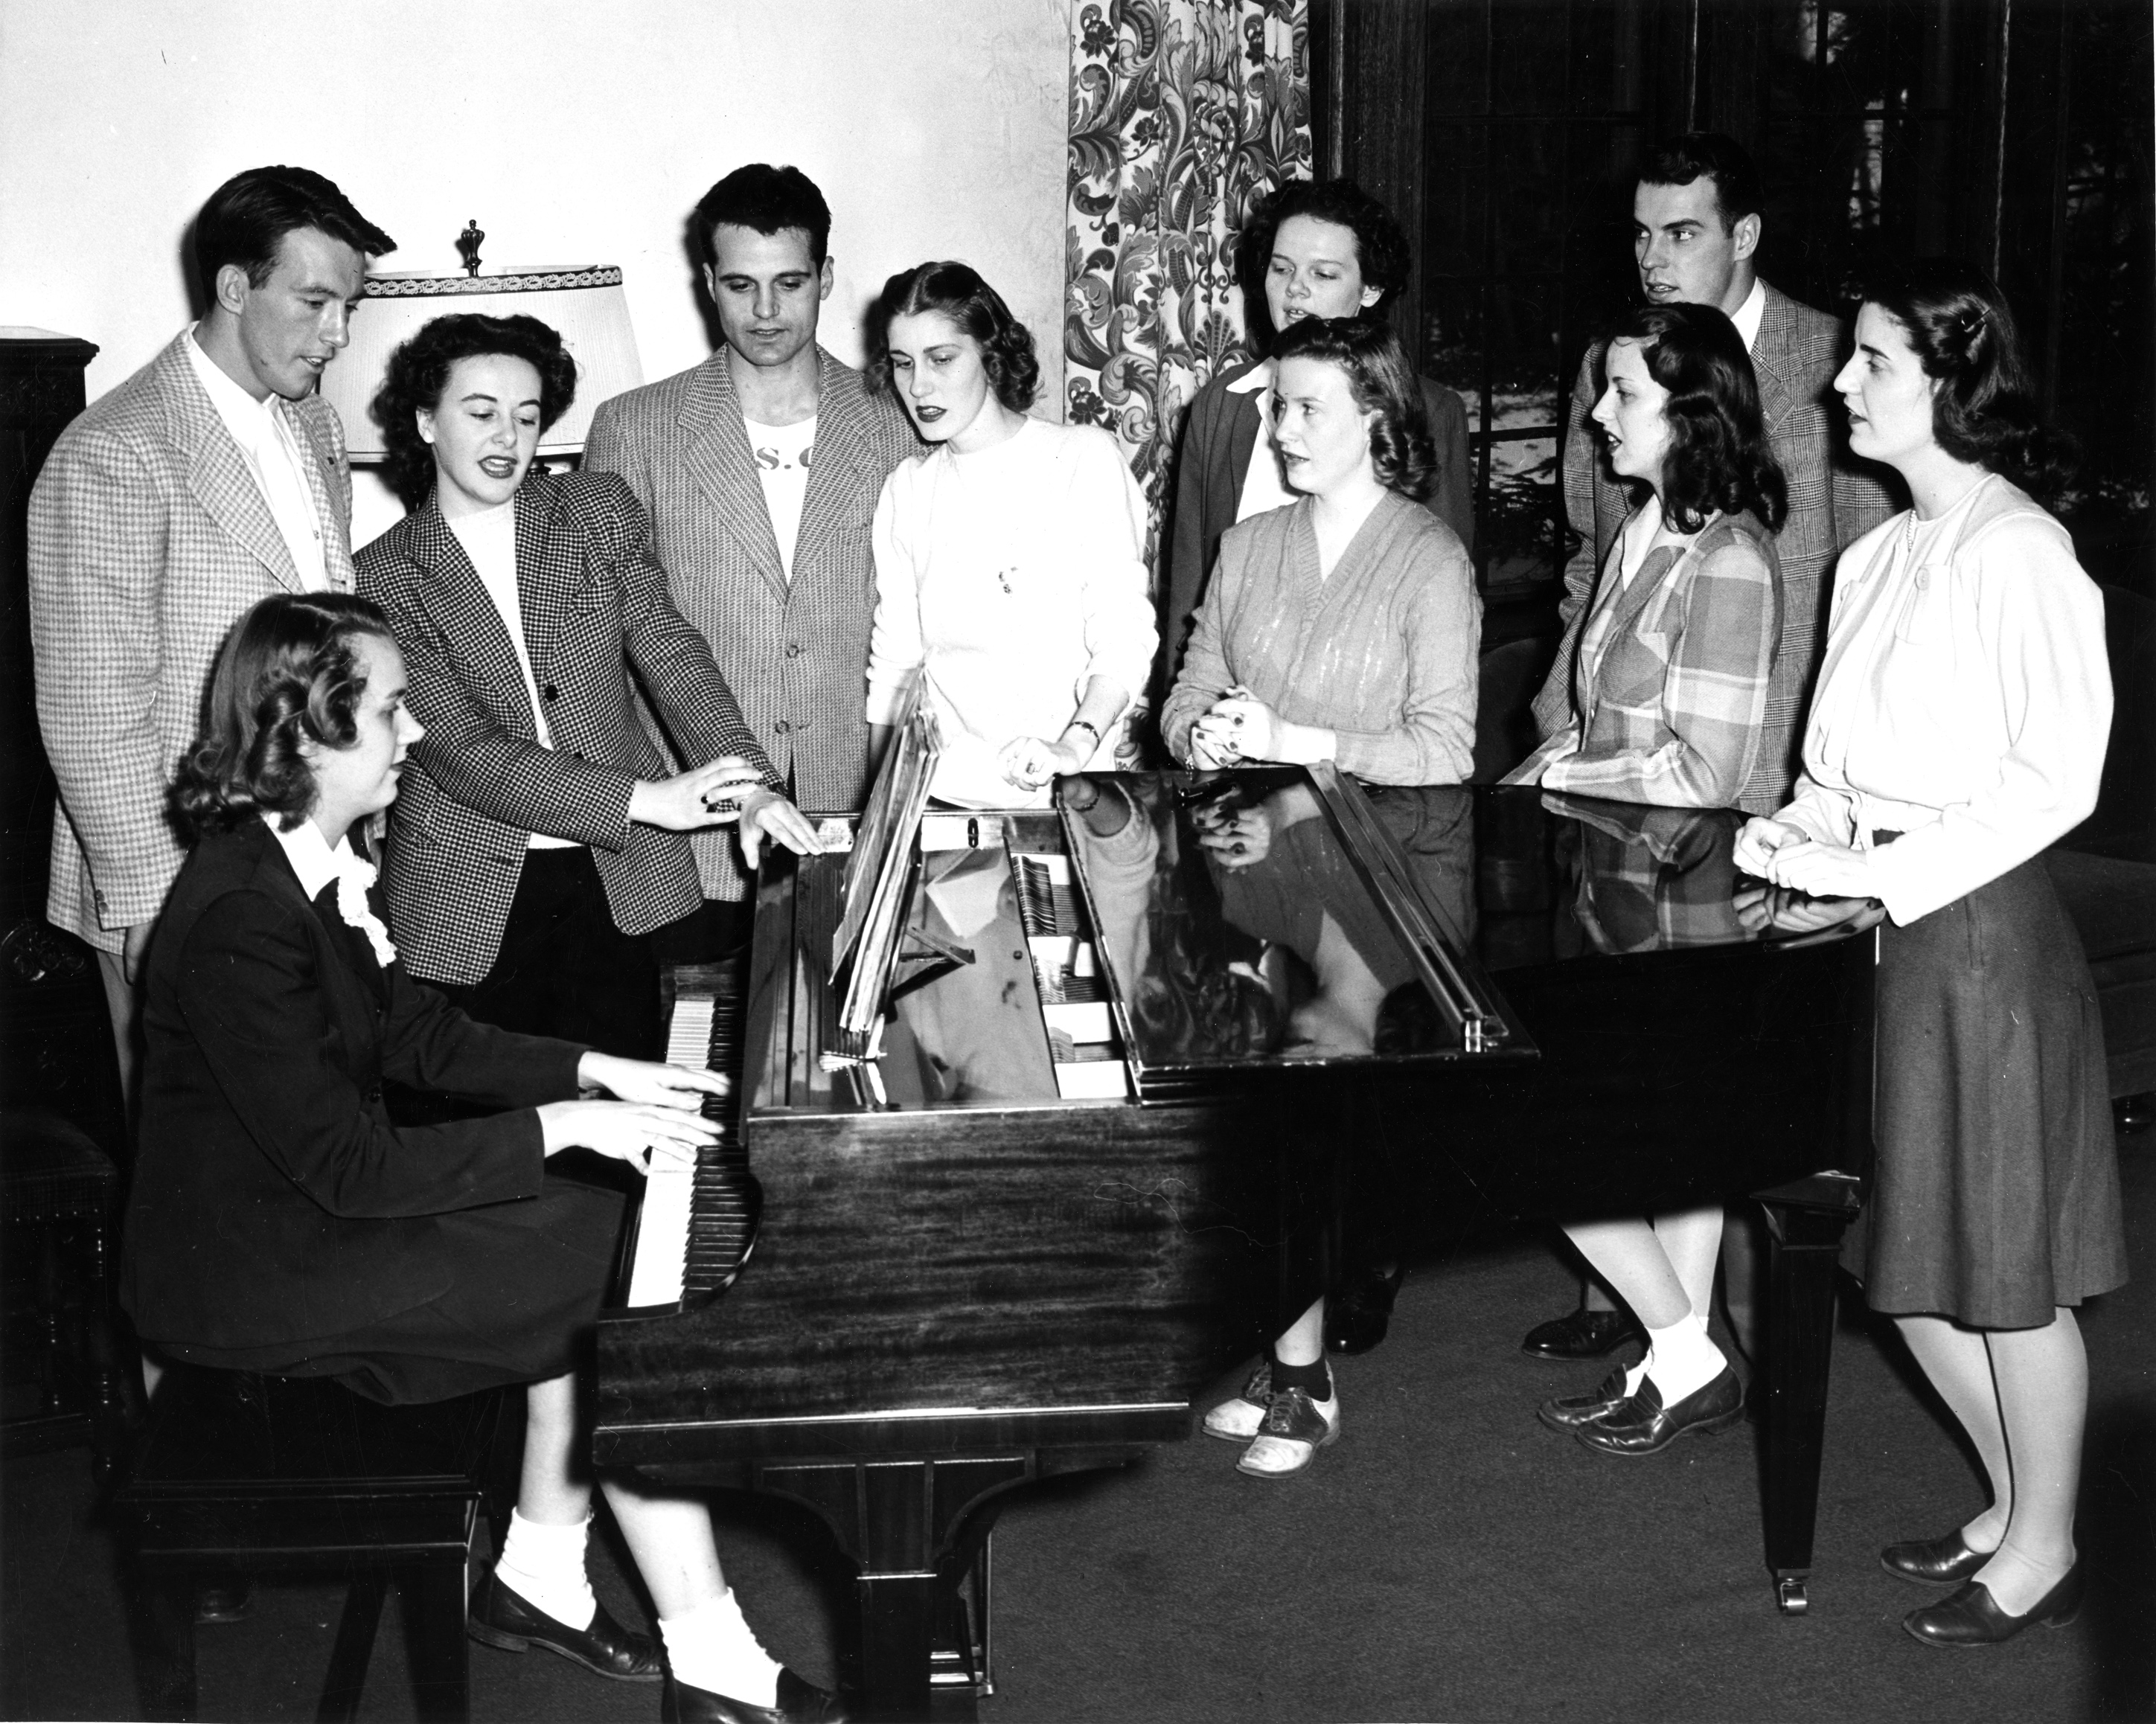 Students gather around a piano, circa 1950